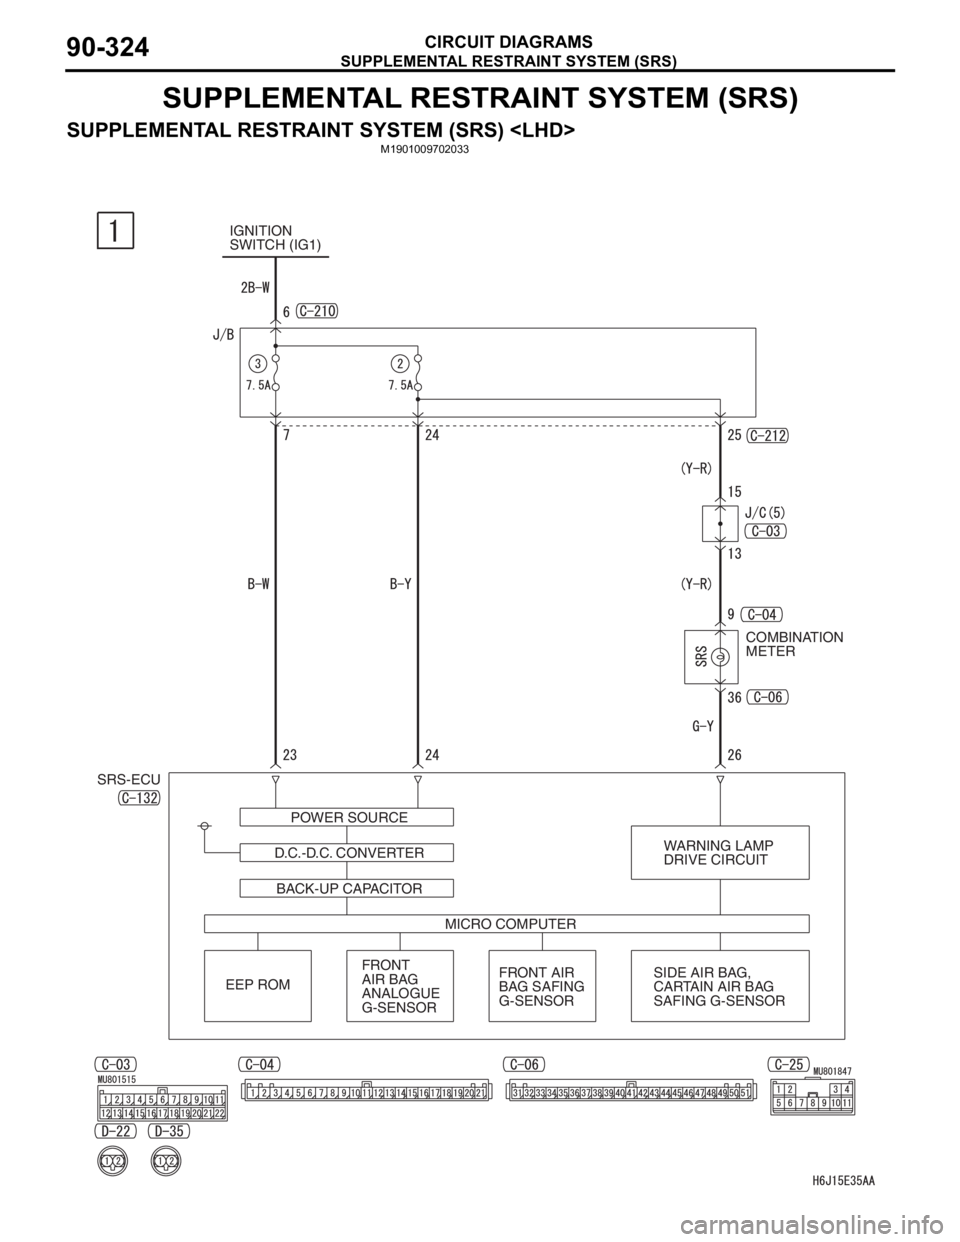 MITSUBISHI LANCER 2006  Workshop Manual SUPPLEMENTAL RESTRAINT SYSTEM (SRS)
CIRCUIT DIAGRAMS90-324
SUPPLEMENTAL RESTRAINT SYSTEM (SRS)
SUPPLEMENTAL RESTRAINT SYSTEM (SRS) <LHD>M1901009702033
IGNITION 
SWITCH (IG1)
COMBINATION 
METER
POWER S